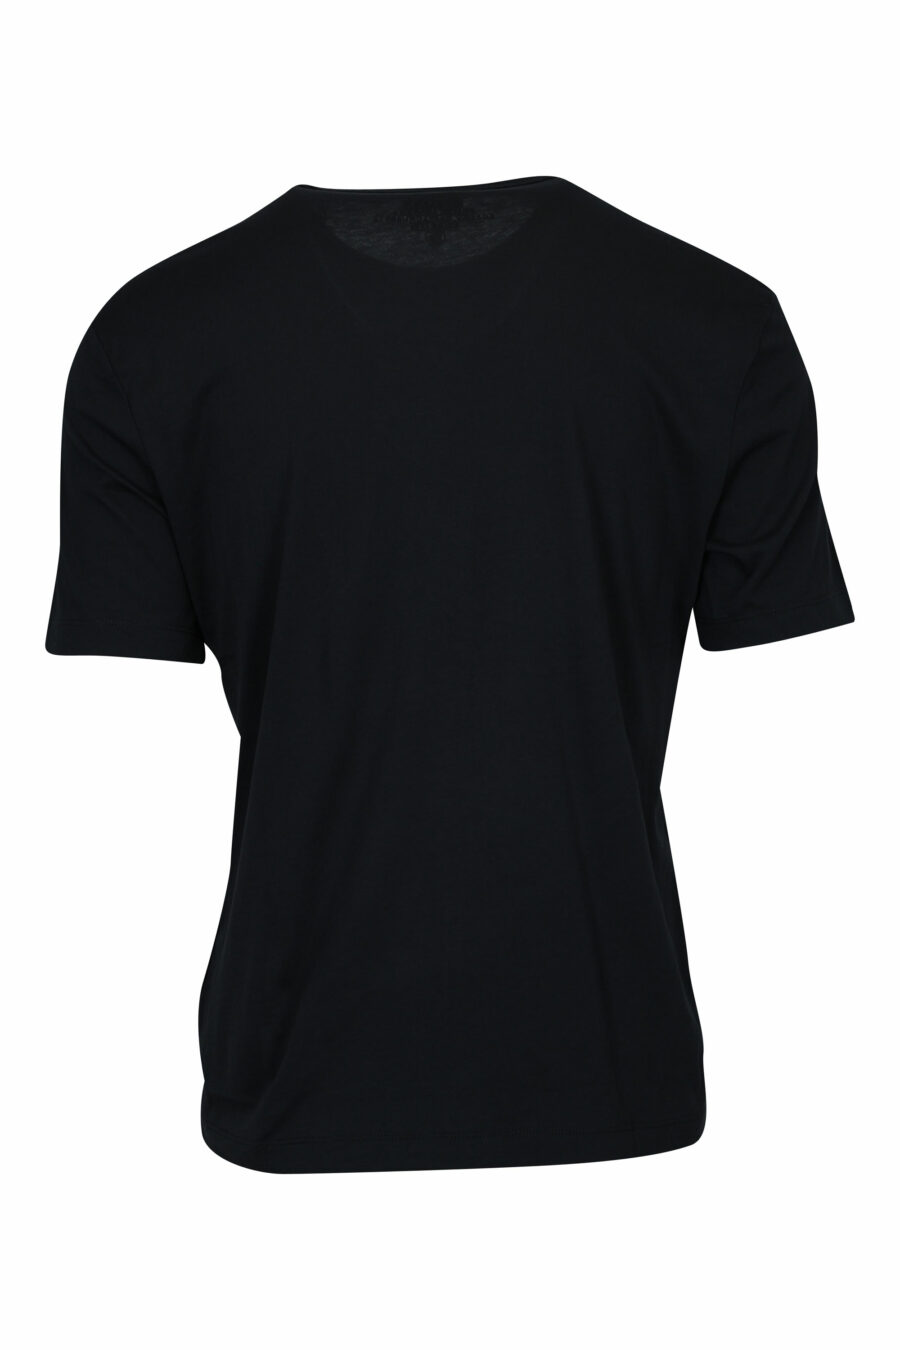 Black T-shirt with "spray" square logo - 8058610800086 1